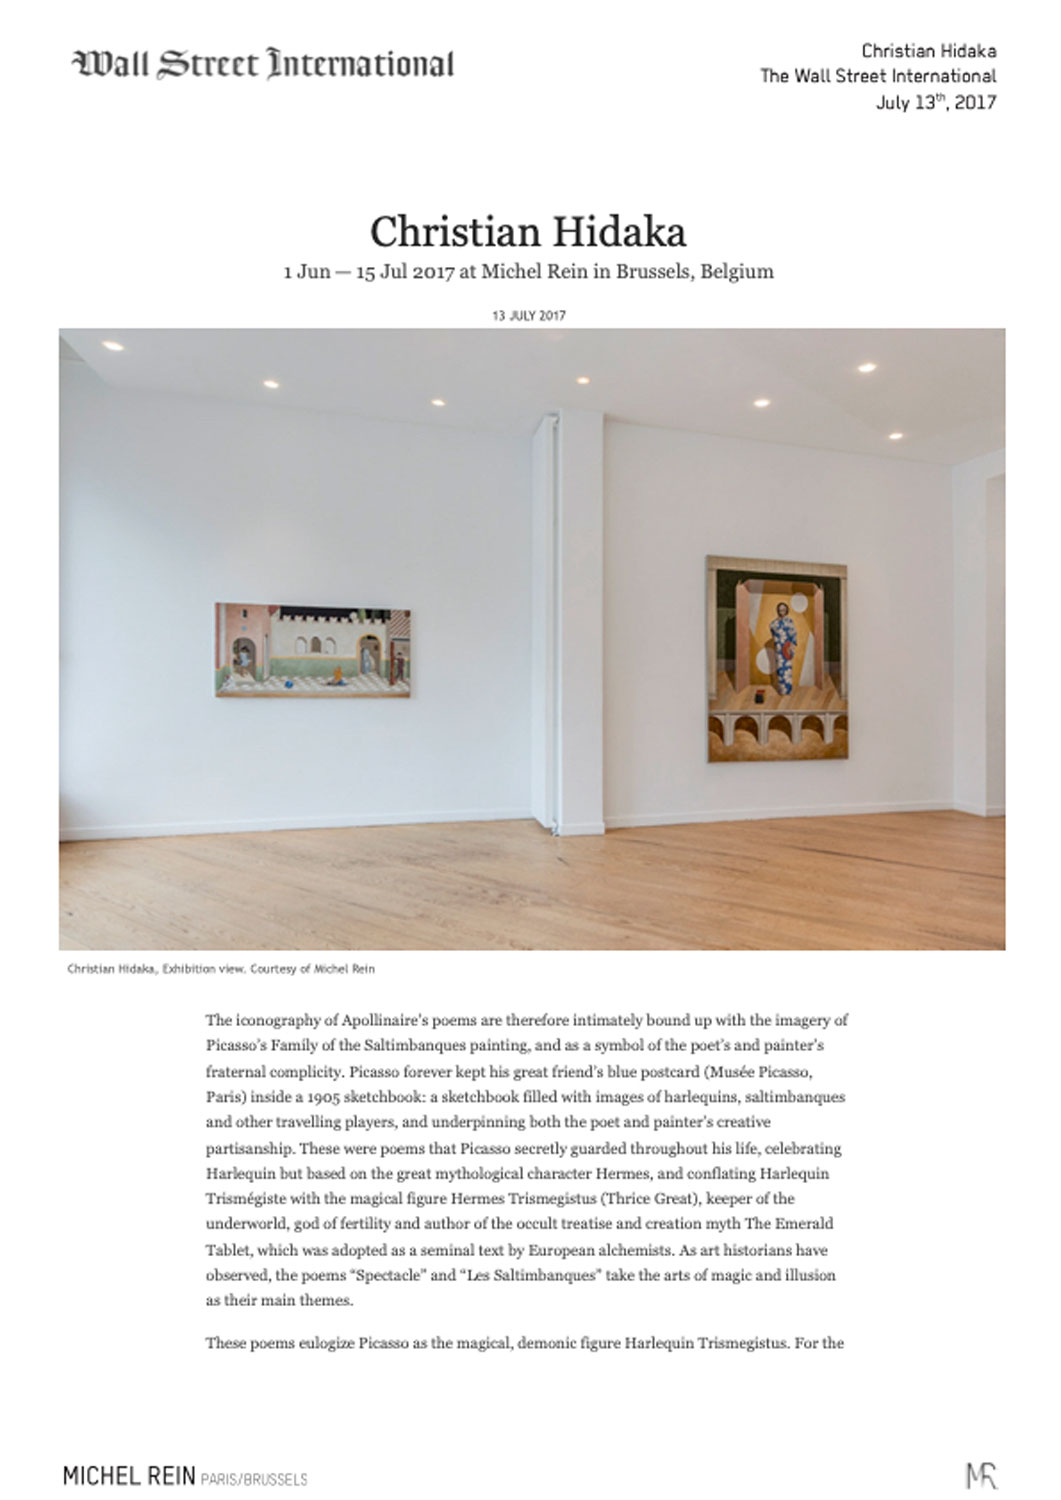 Christian Hidaka - Wall Street International